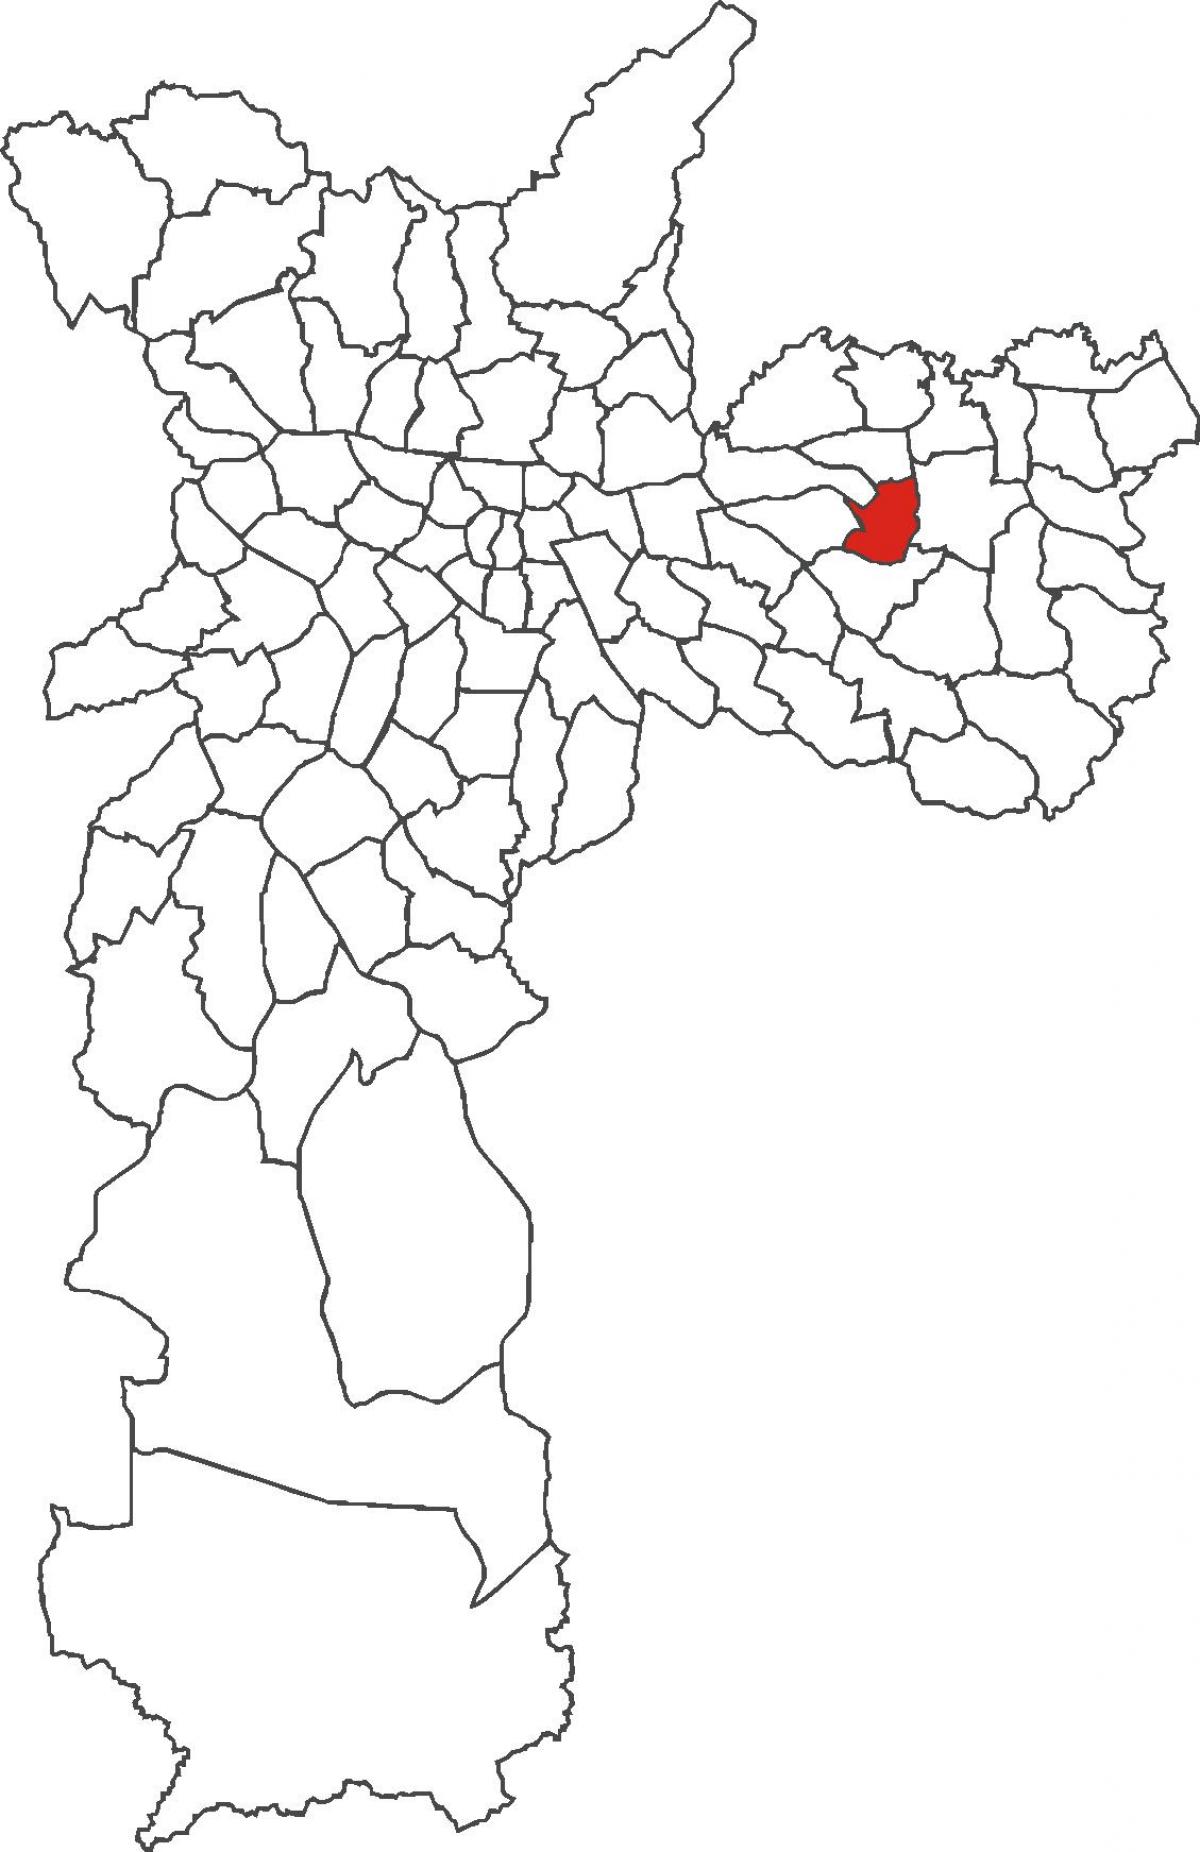 Kaart van Artur Alvim distrik